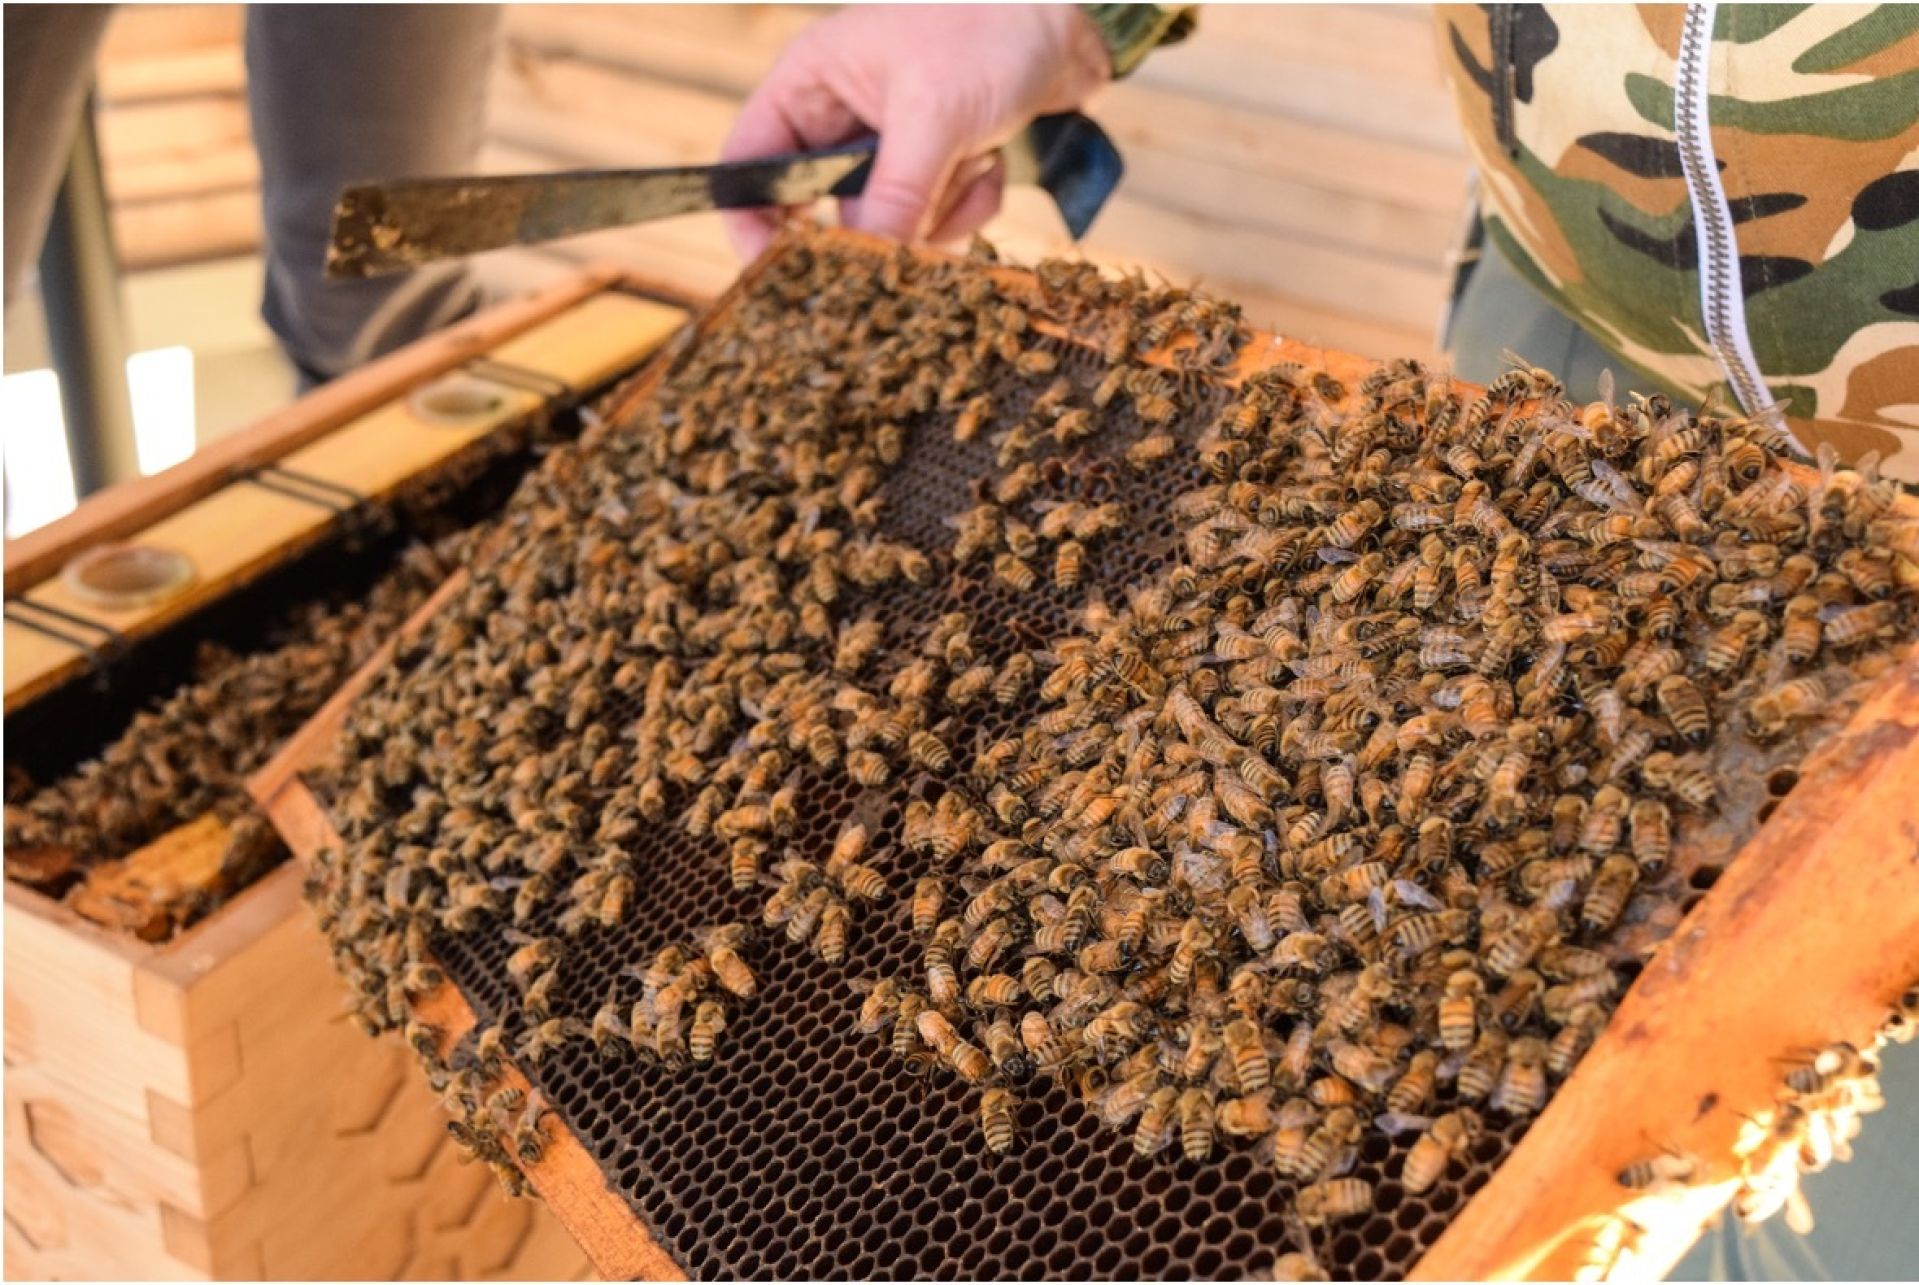 Beekeeper tending to a hive